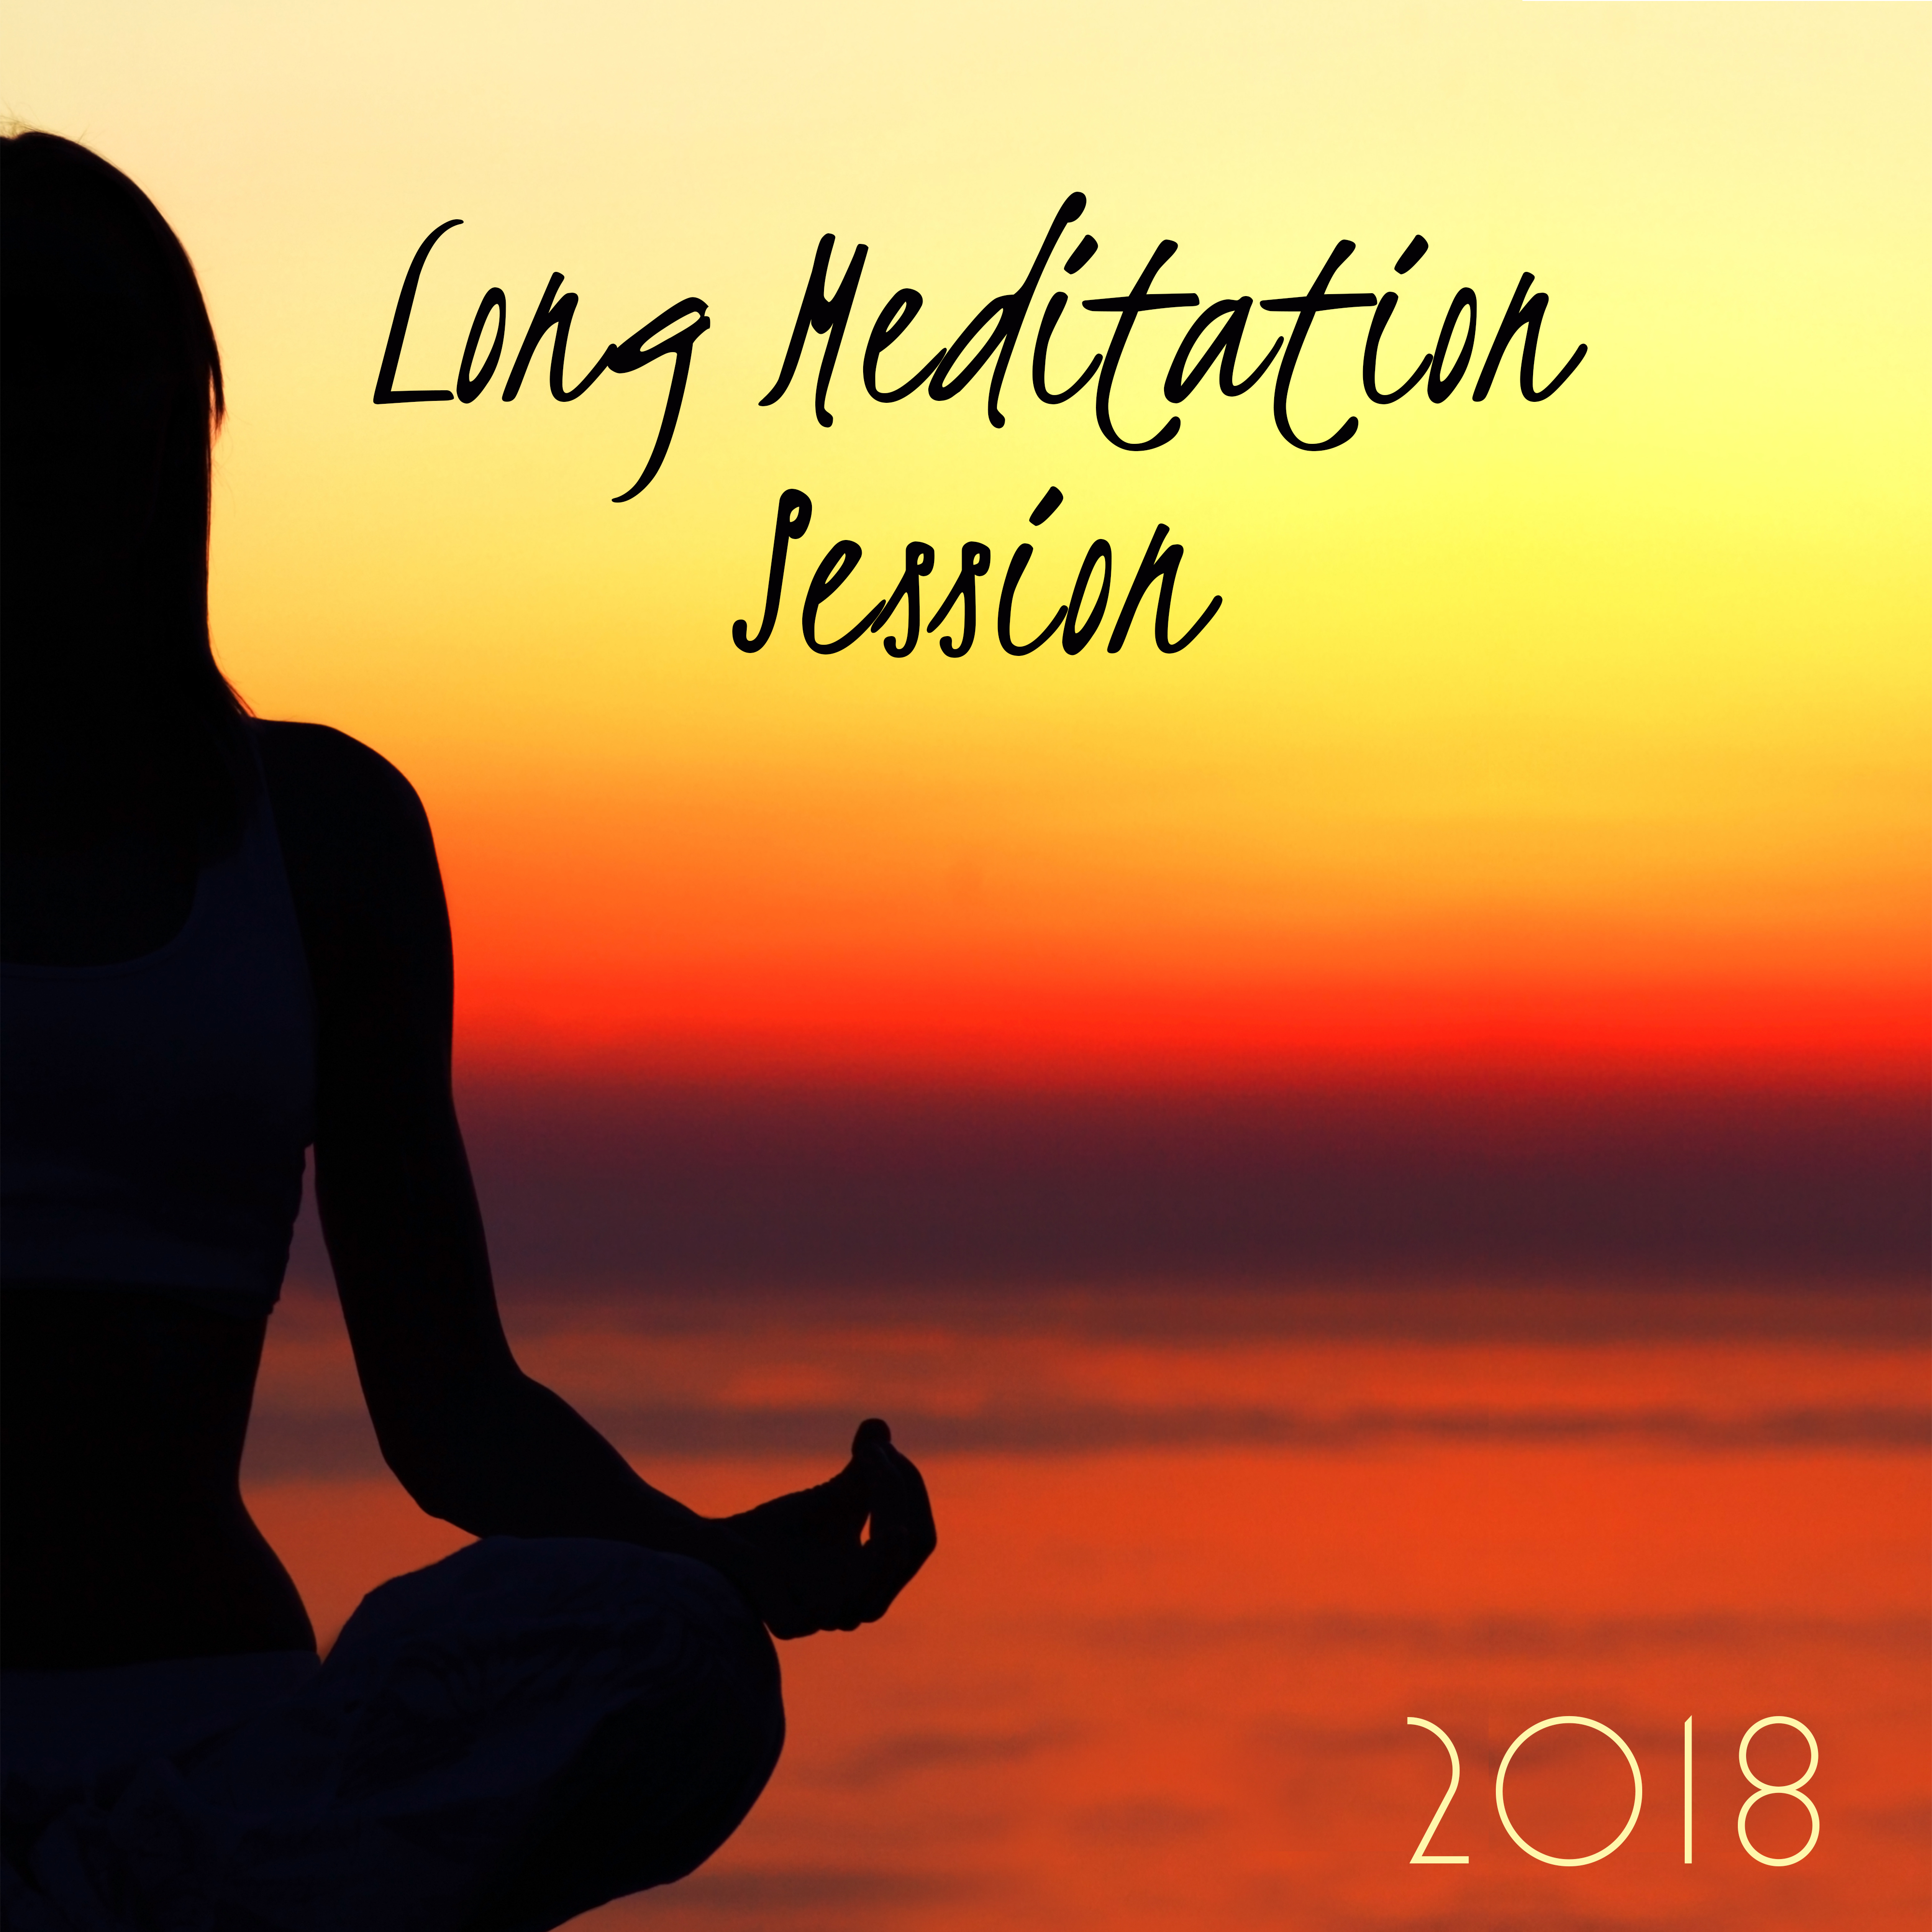 2018 Long Meditation Session